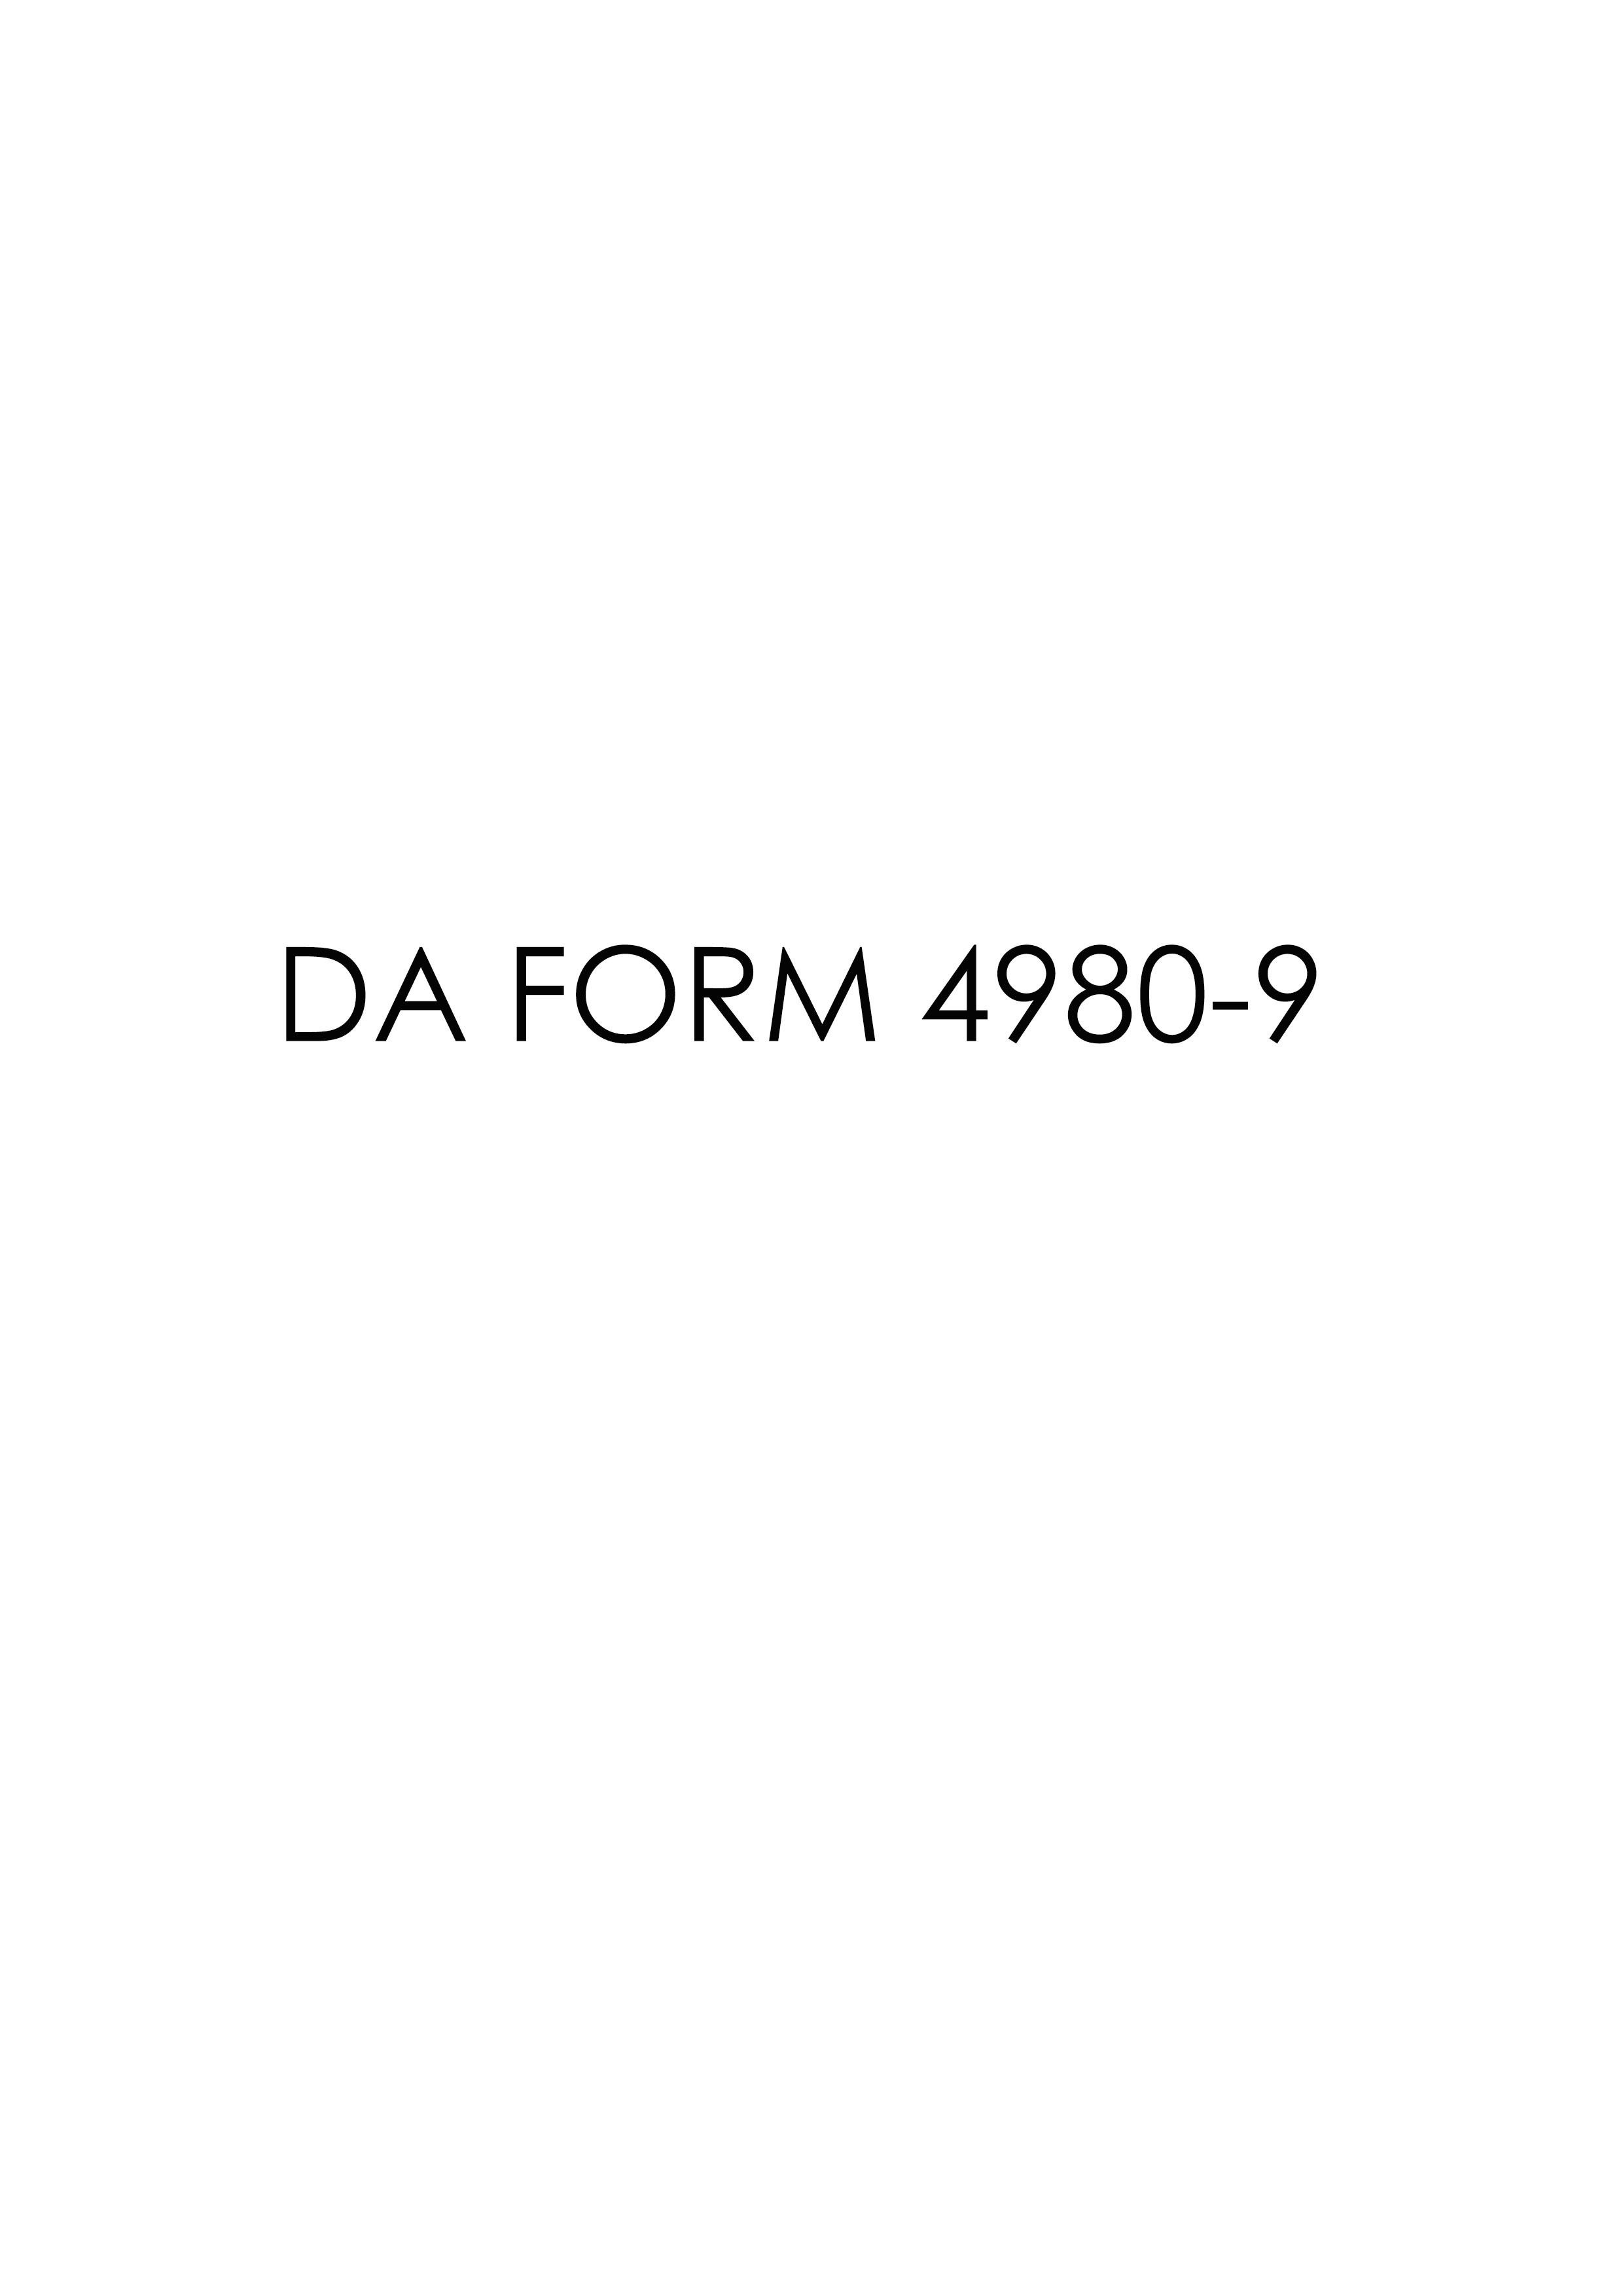 da Form 4980-9 fillable